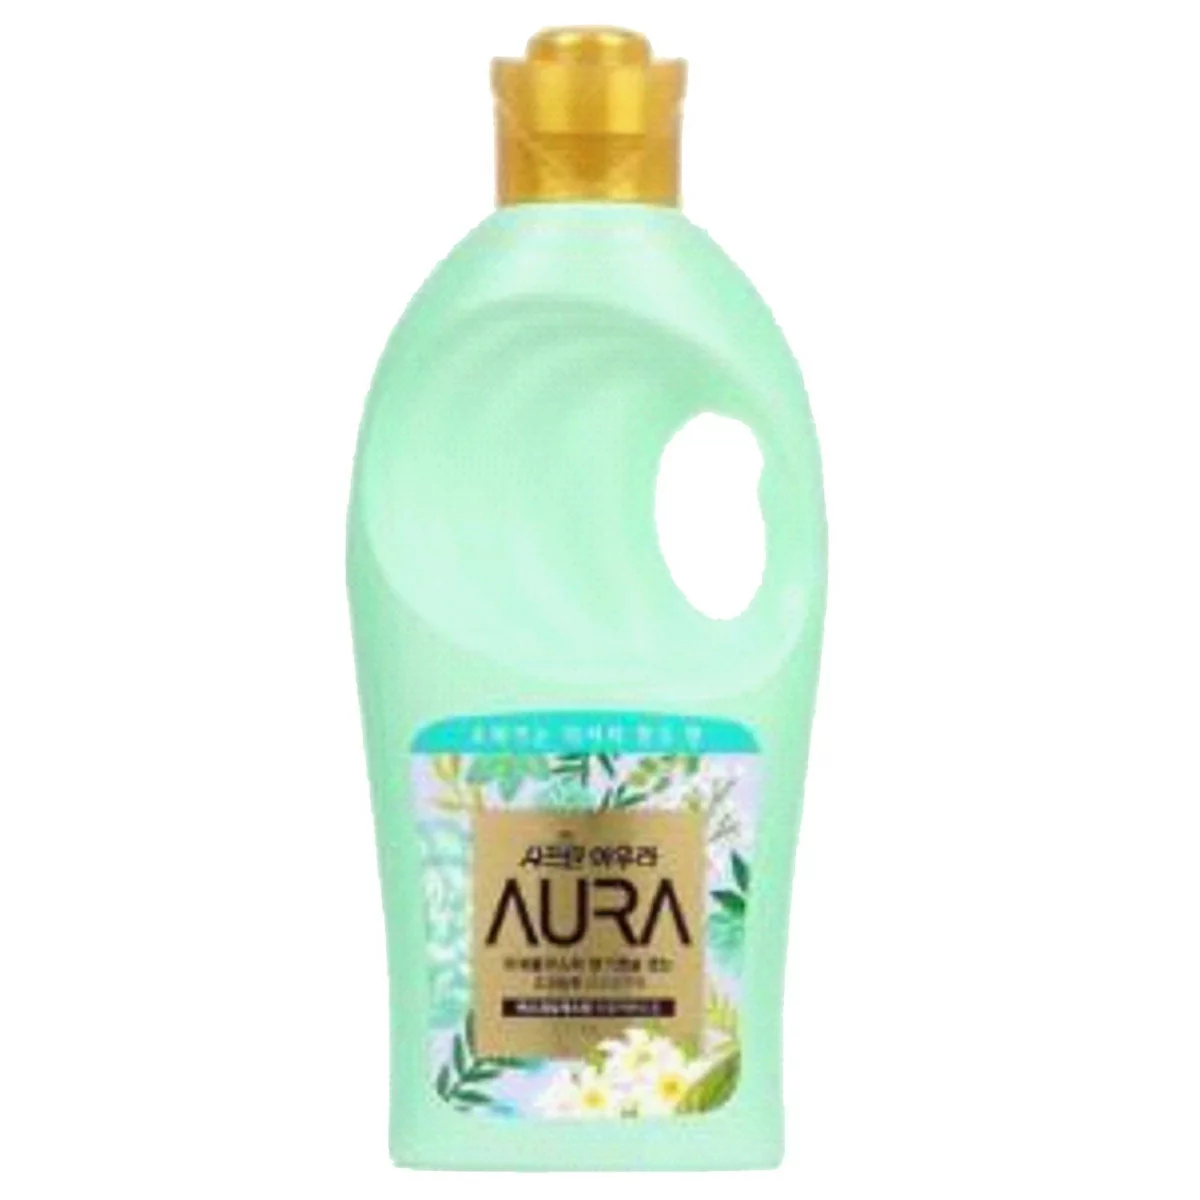 Saffron(サフロン) AURA 柔軟剤の商品画像1 